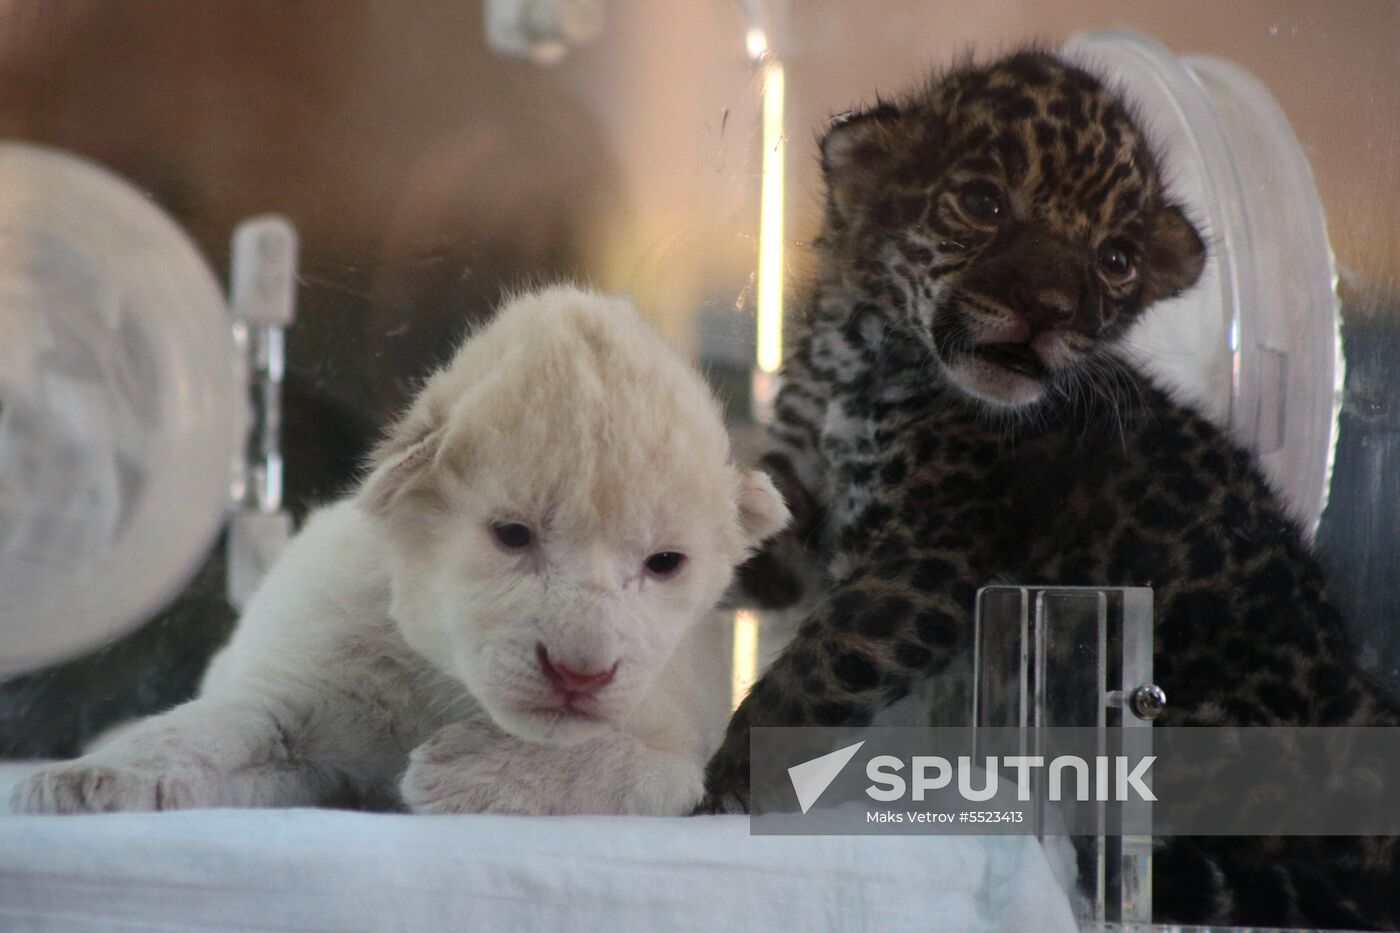 Newly-born cubs in Crimean Taigan safari park